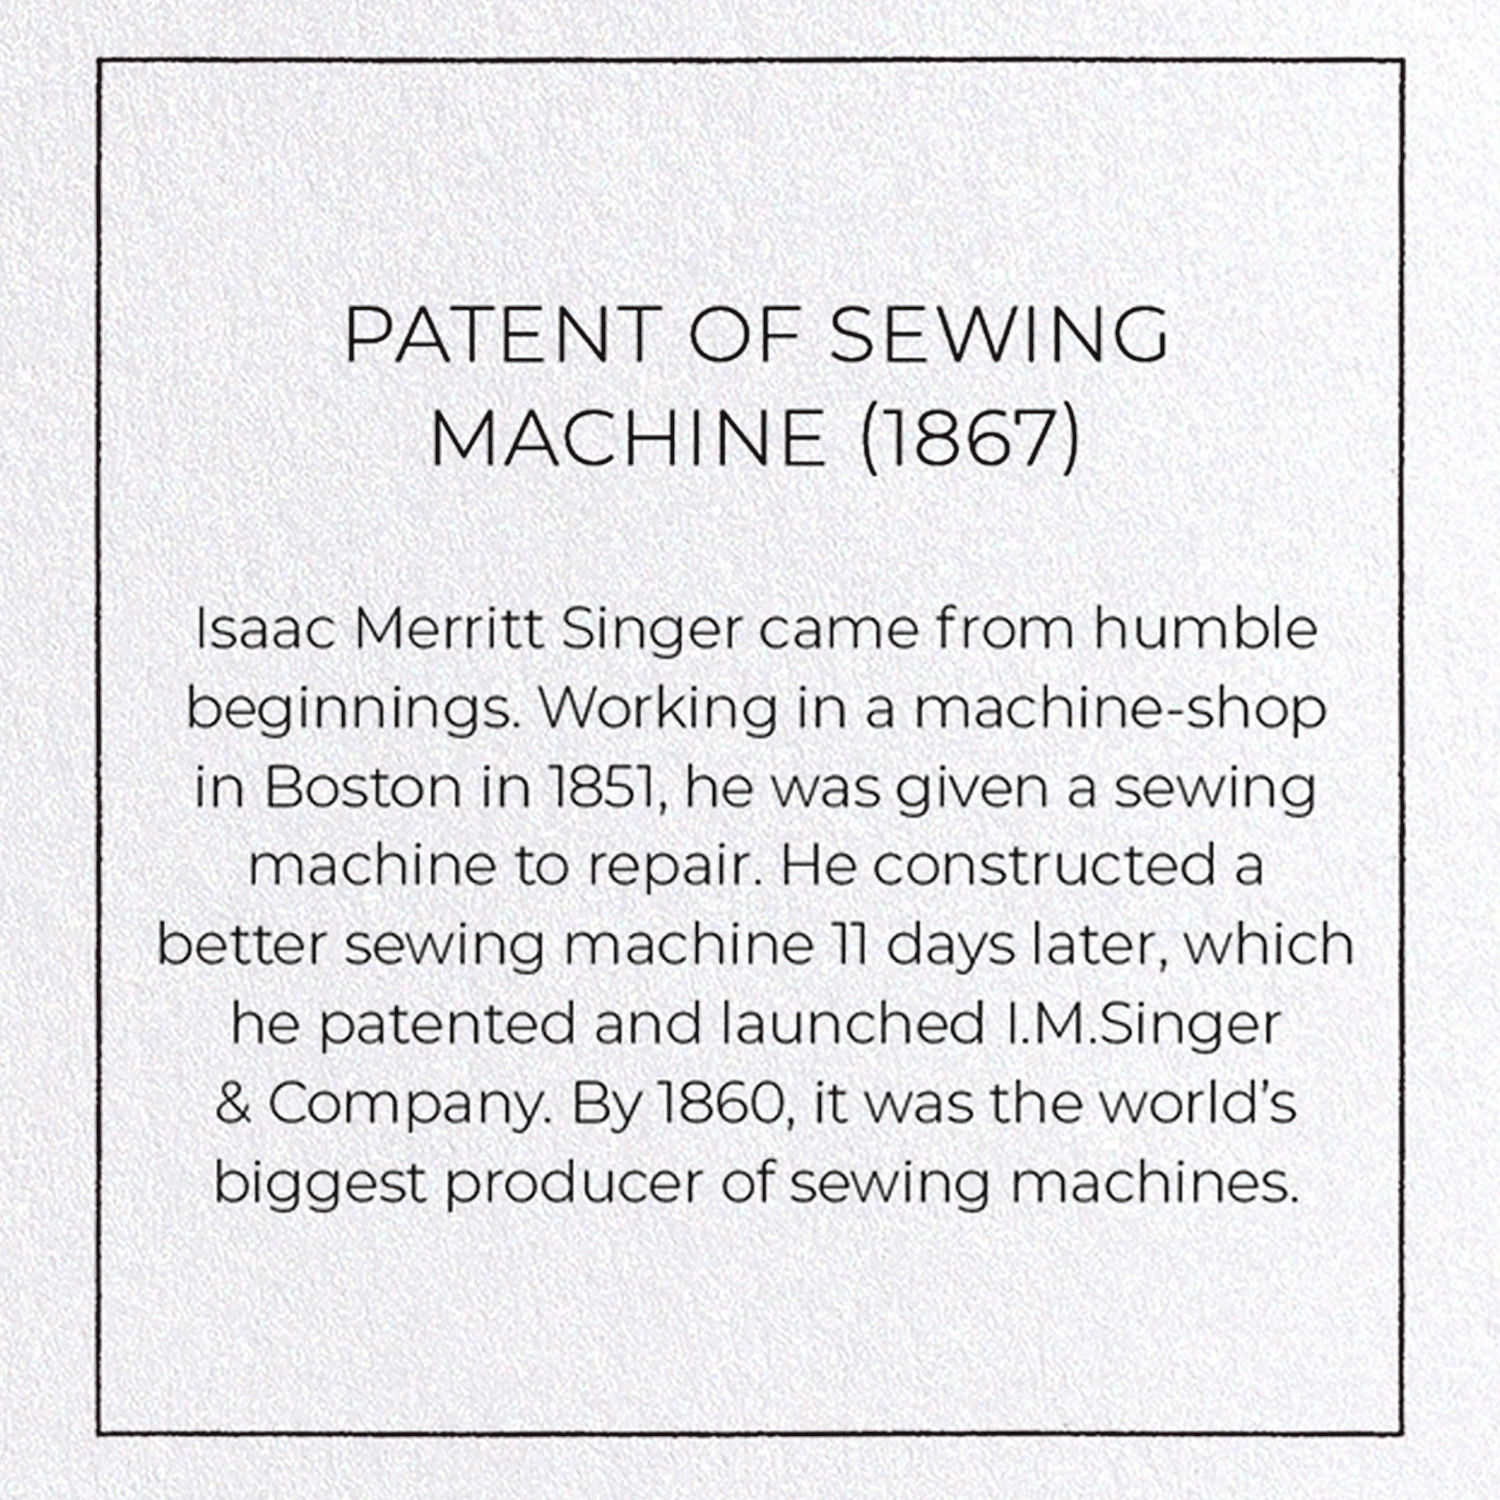 PATENT OF SEWING MACHINE (1867)